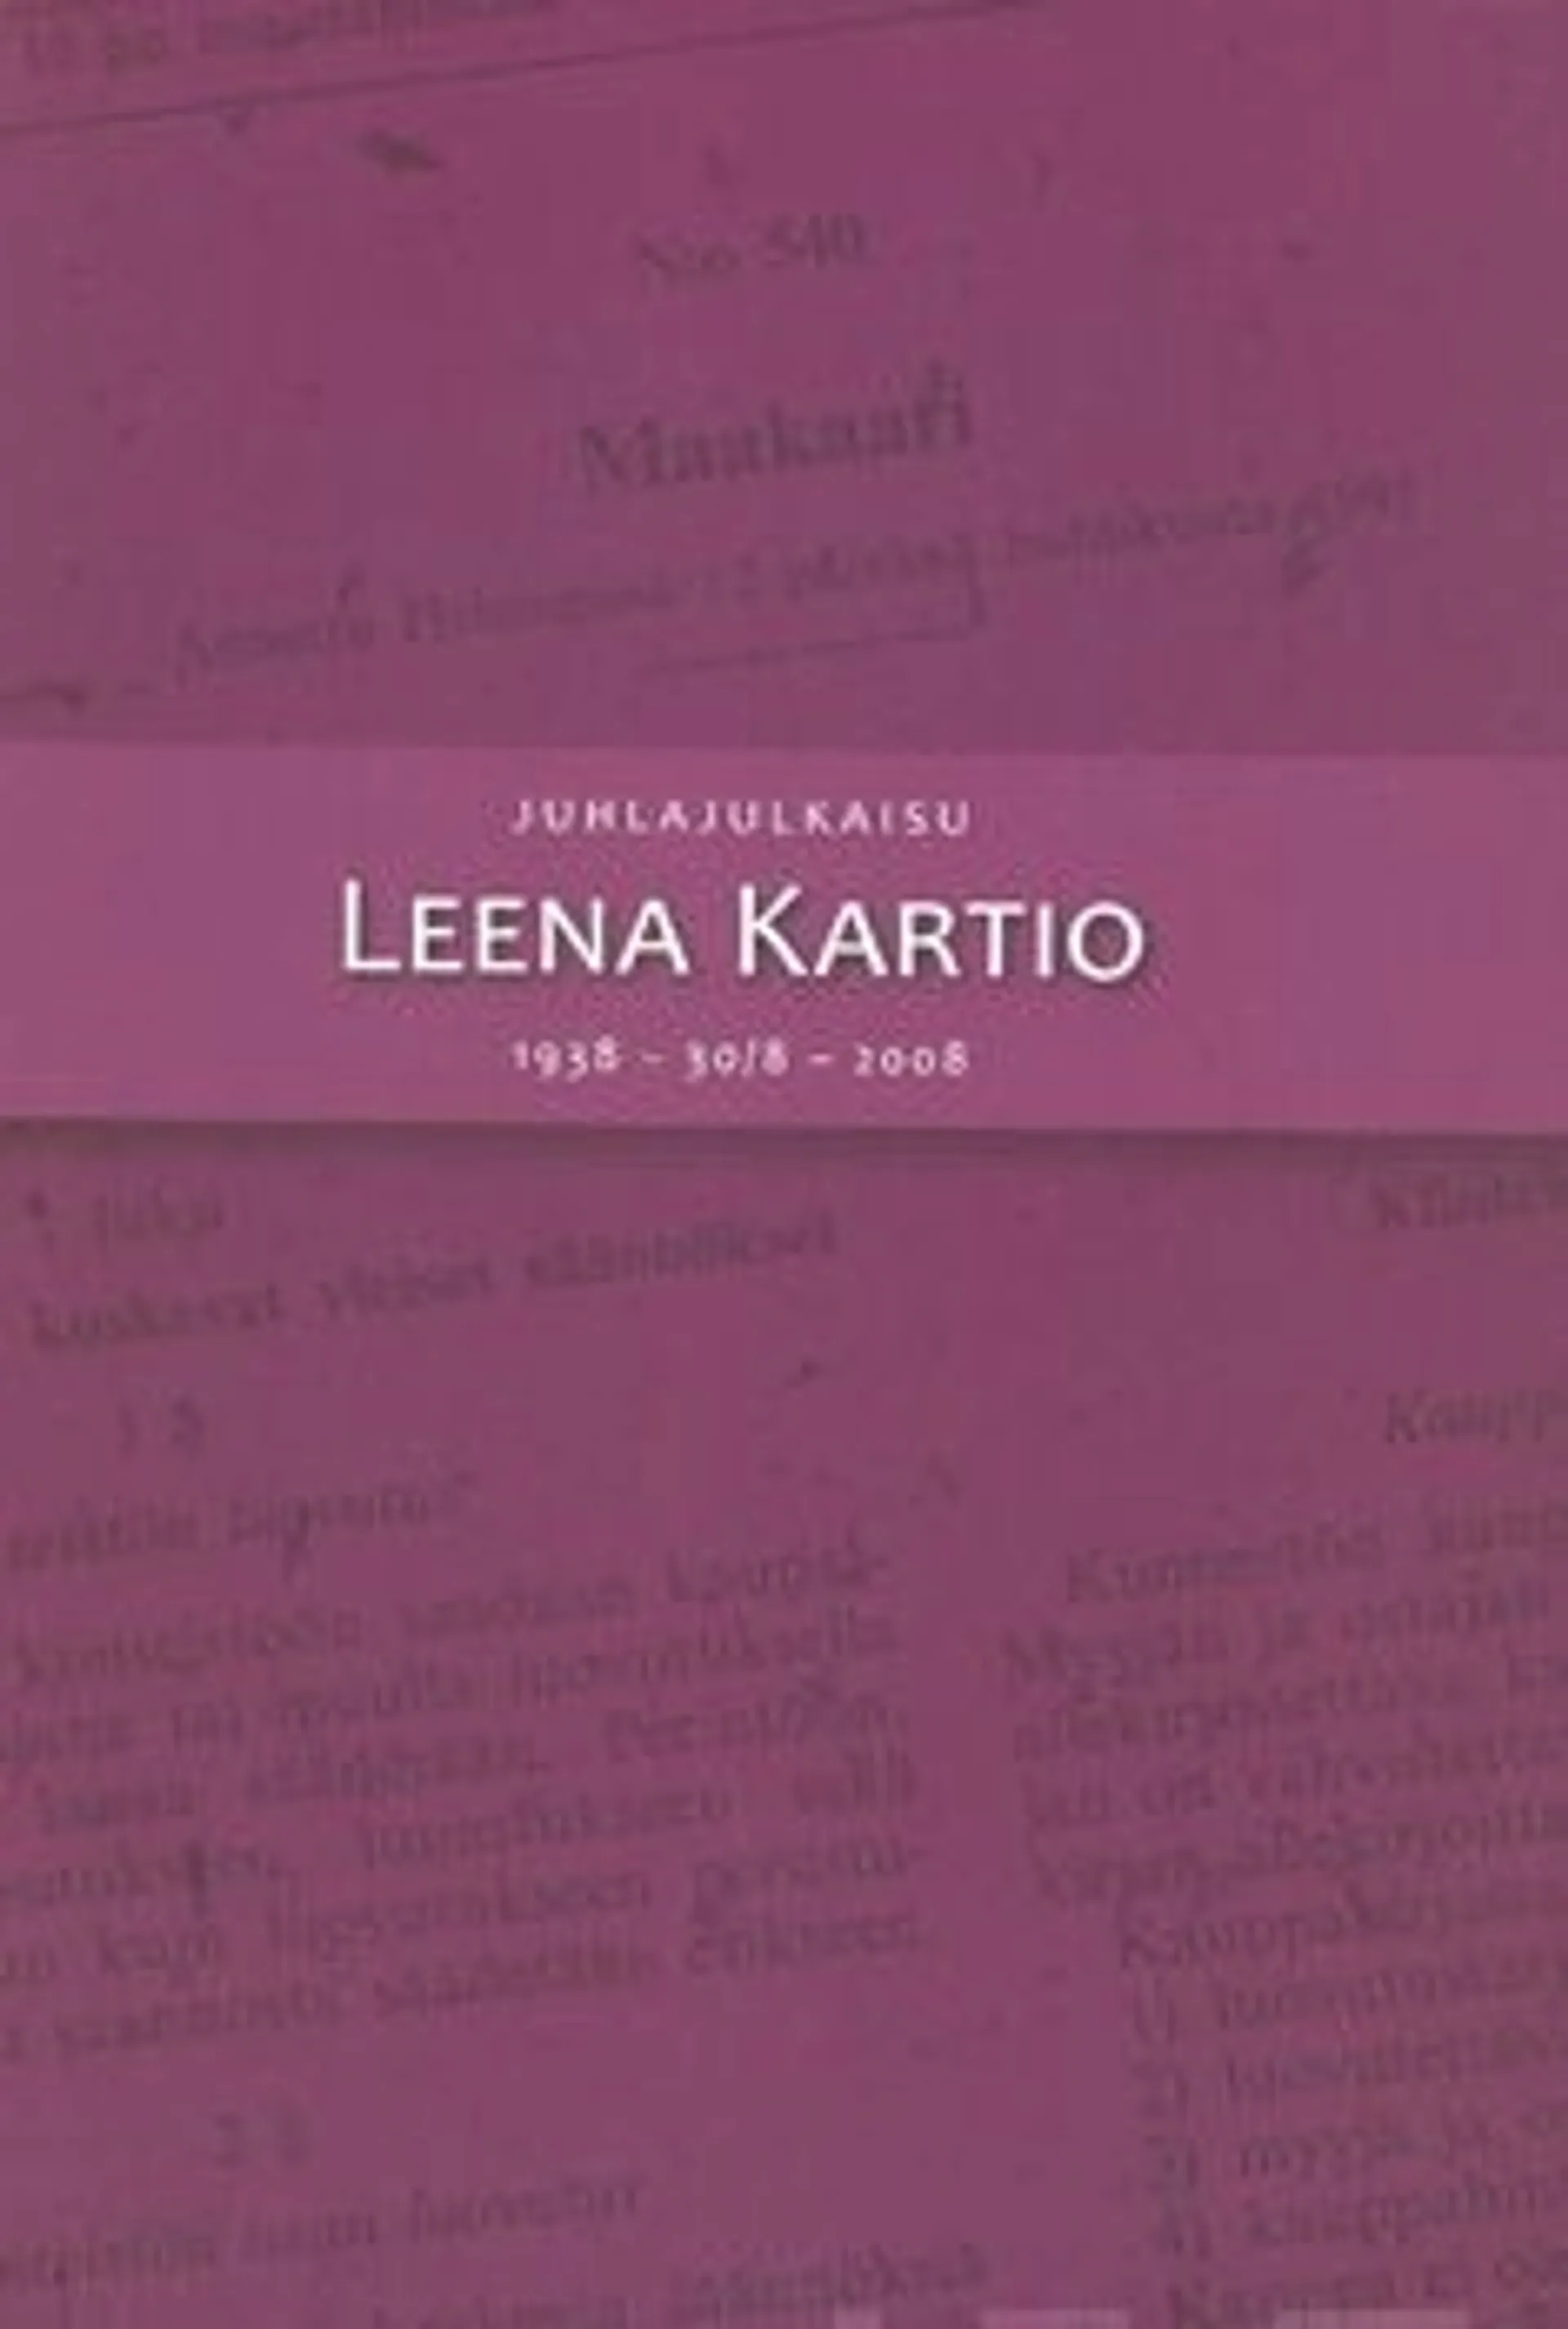 Juhlajulkaisu Leena Kartio 1938 - 30/8 - 2008